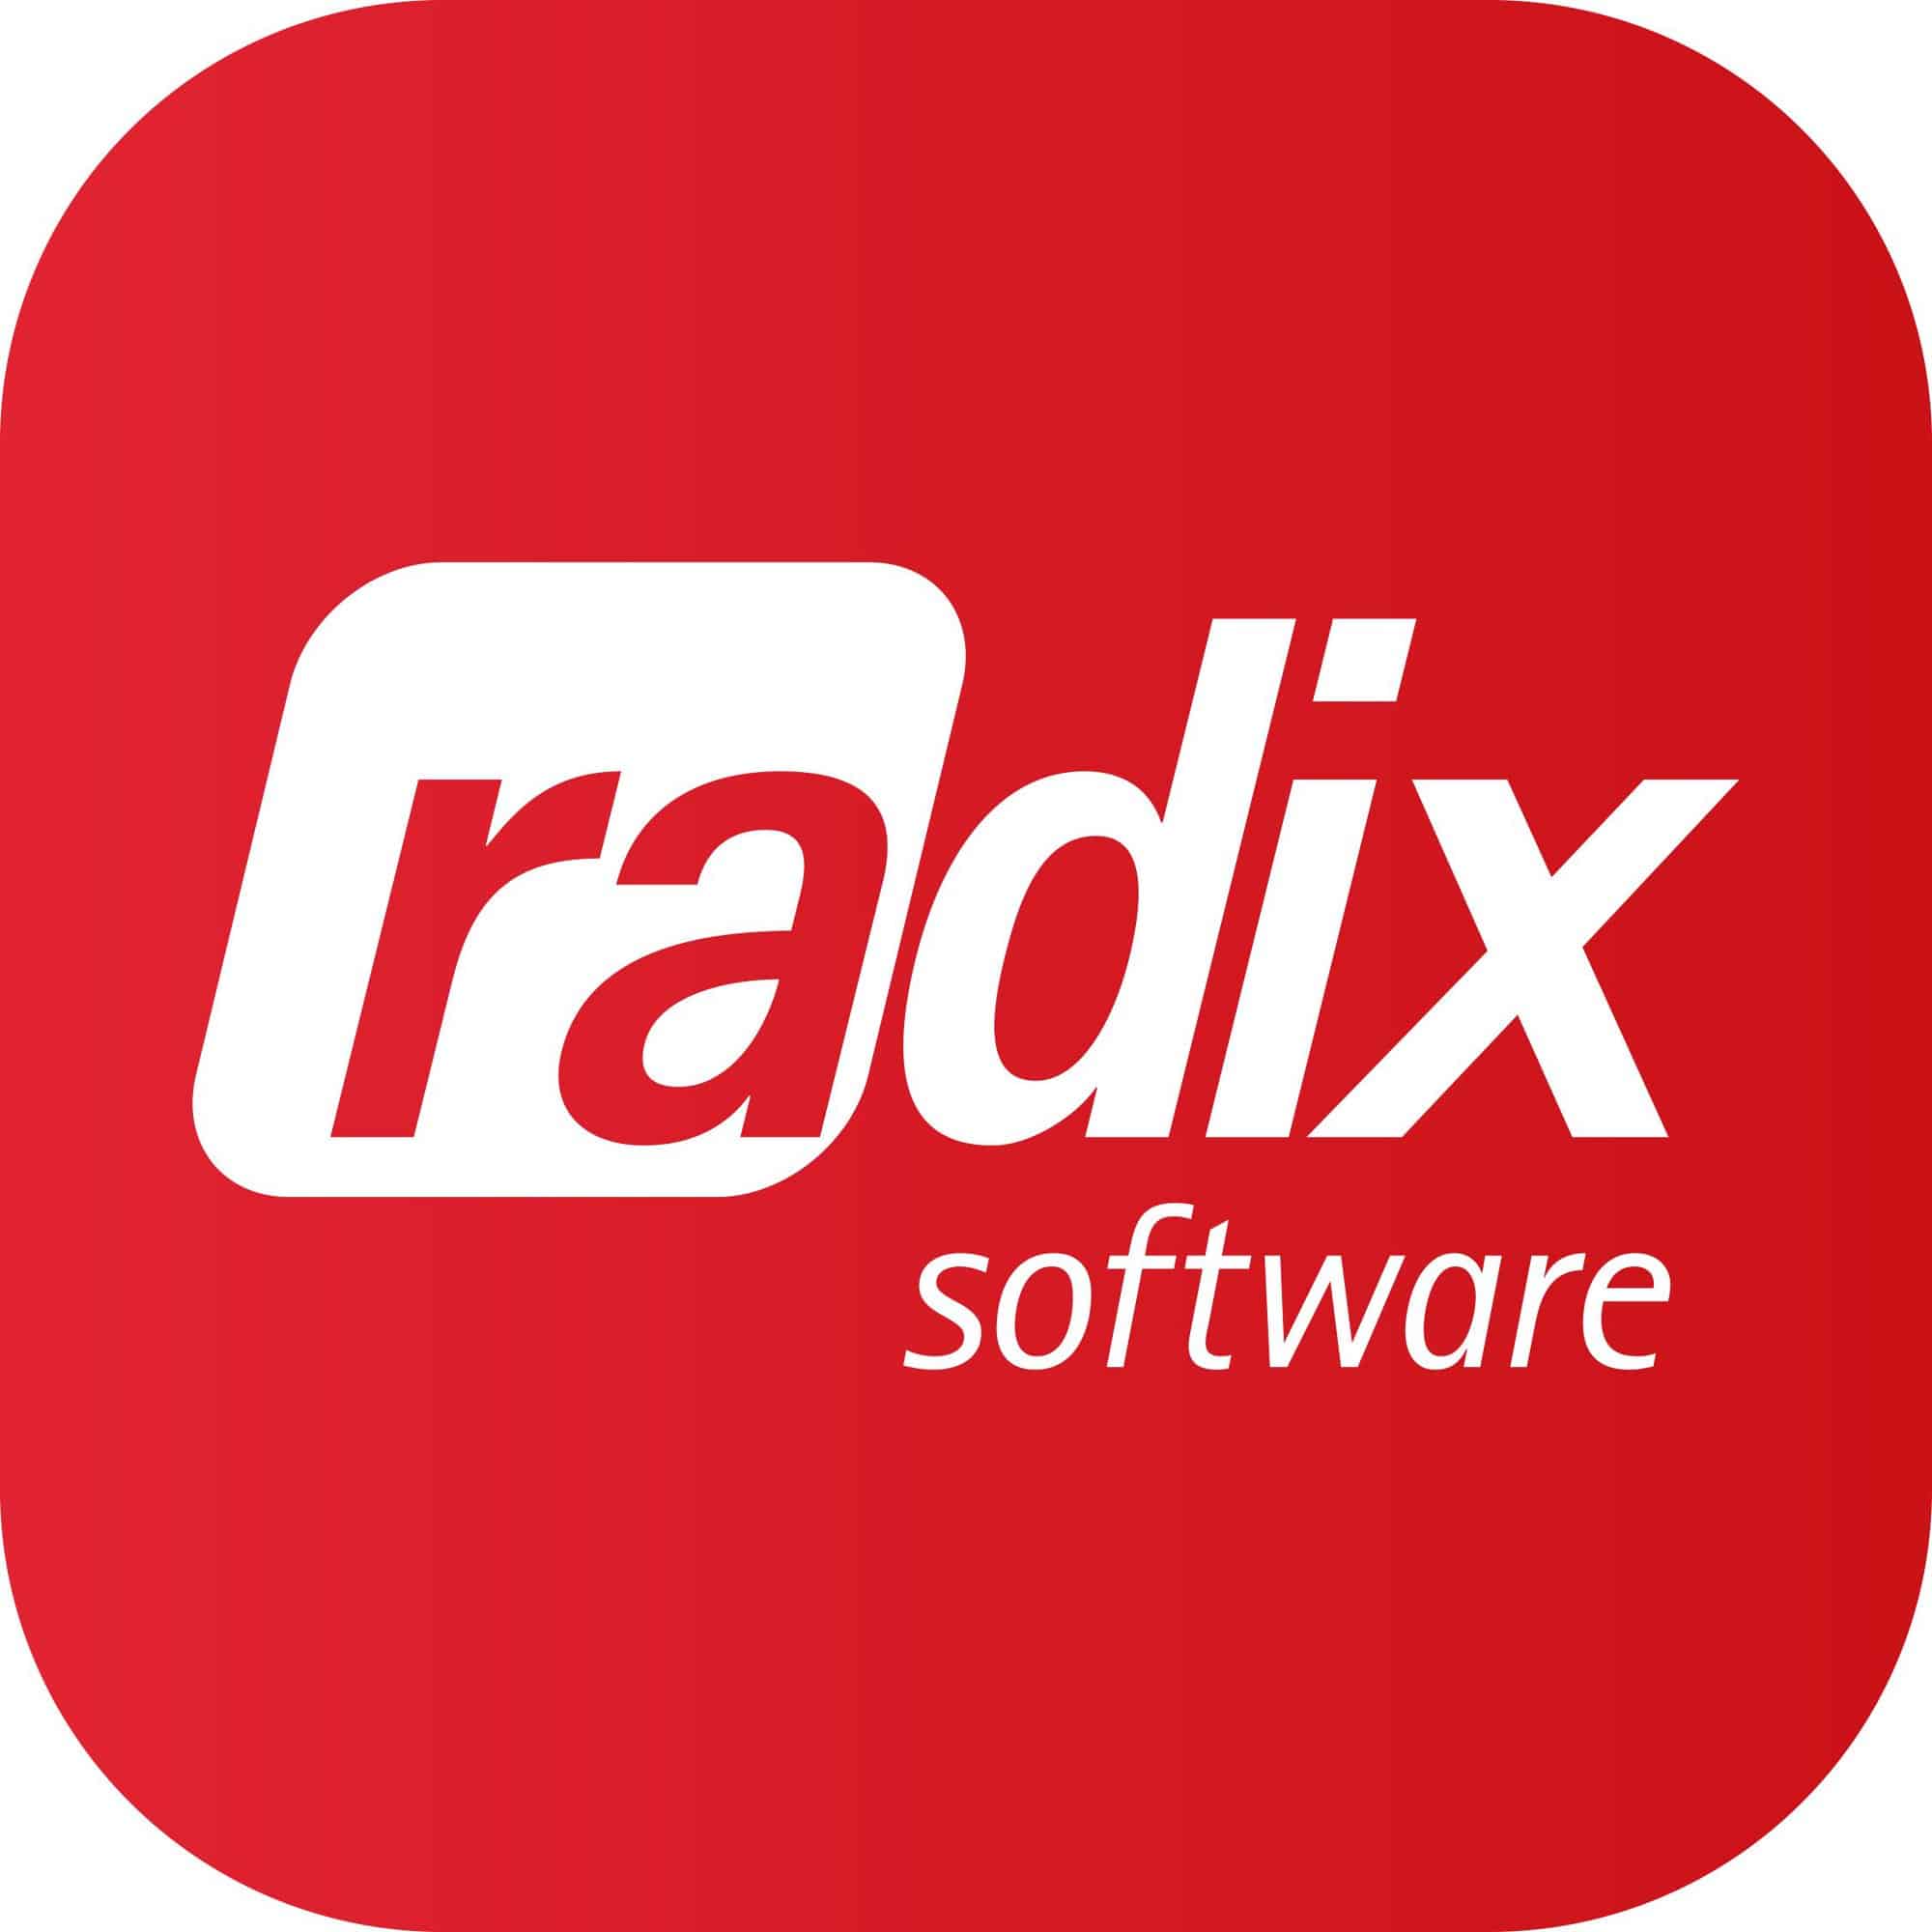 Radix software logo icon